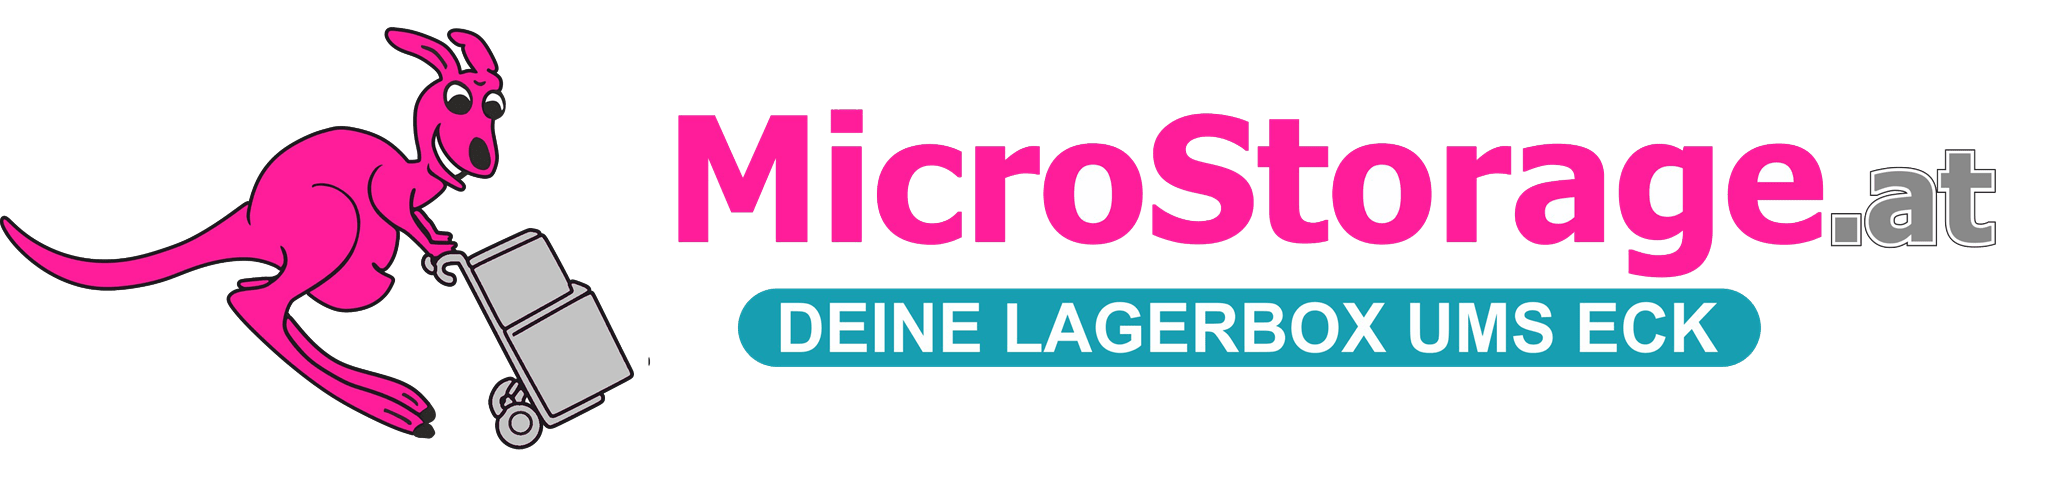 Microstorage Logo